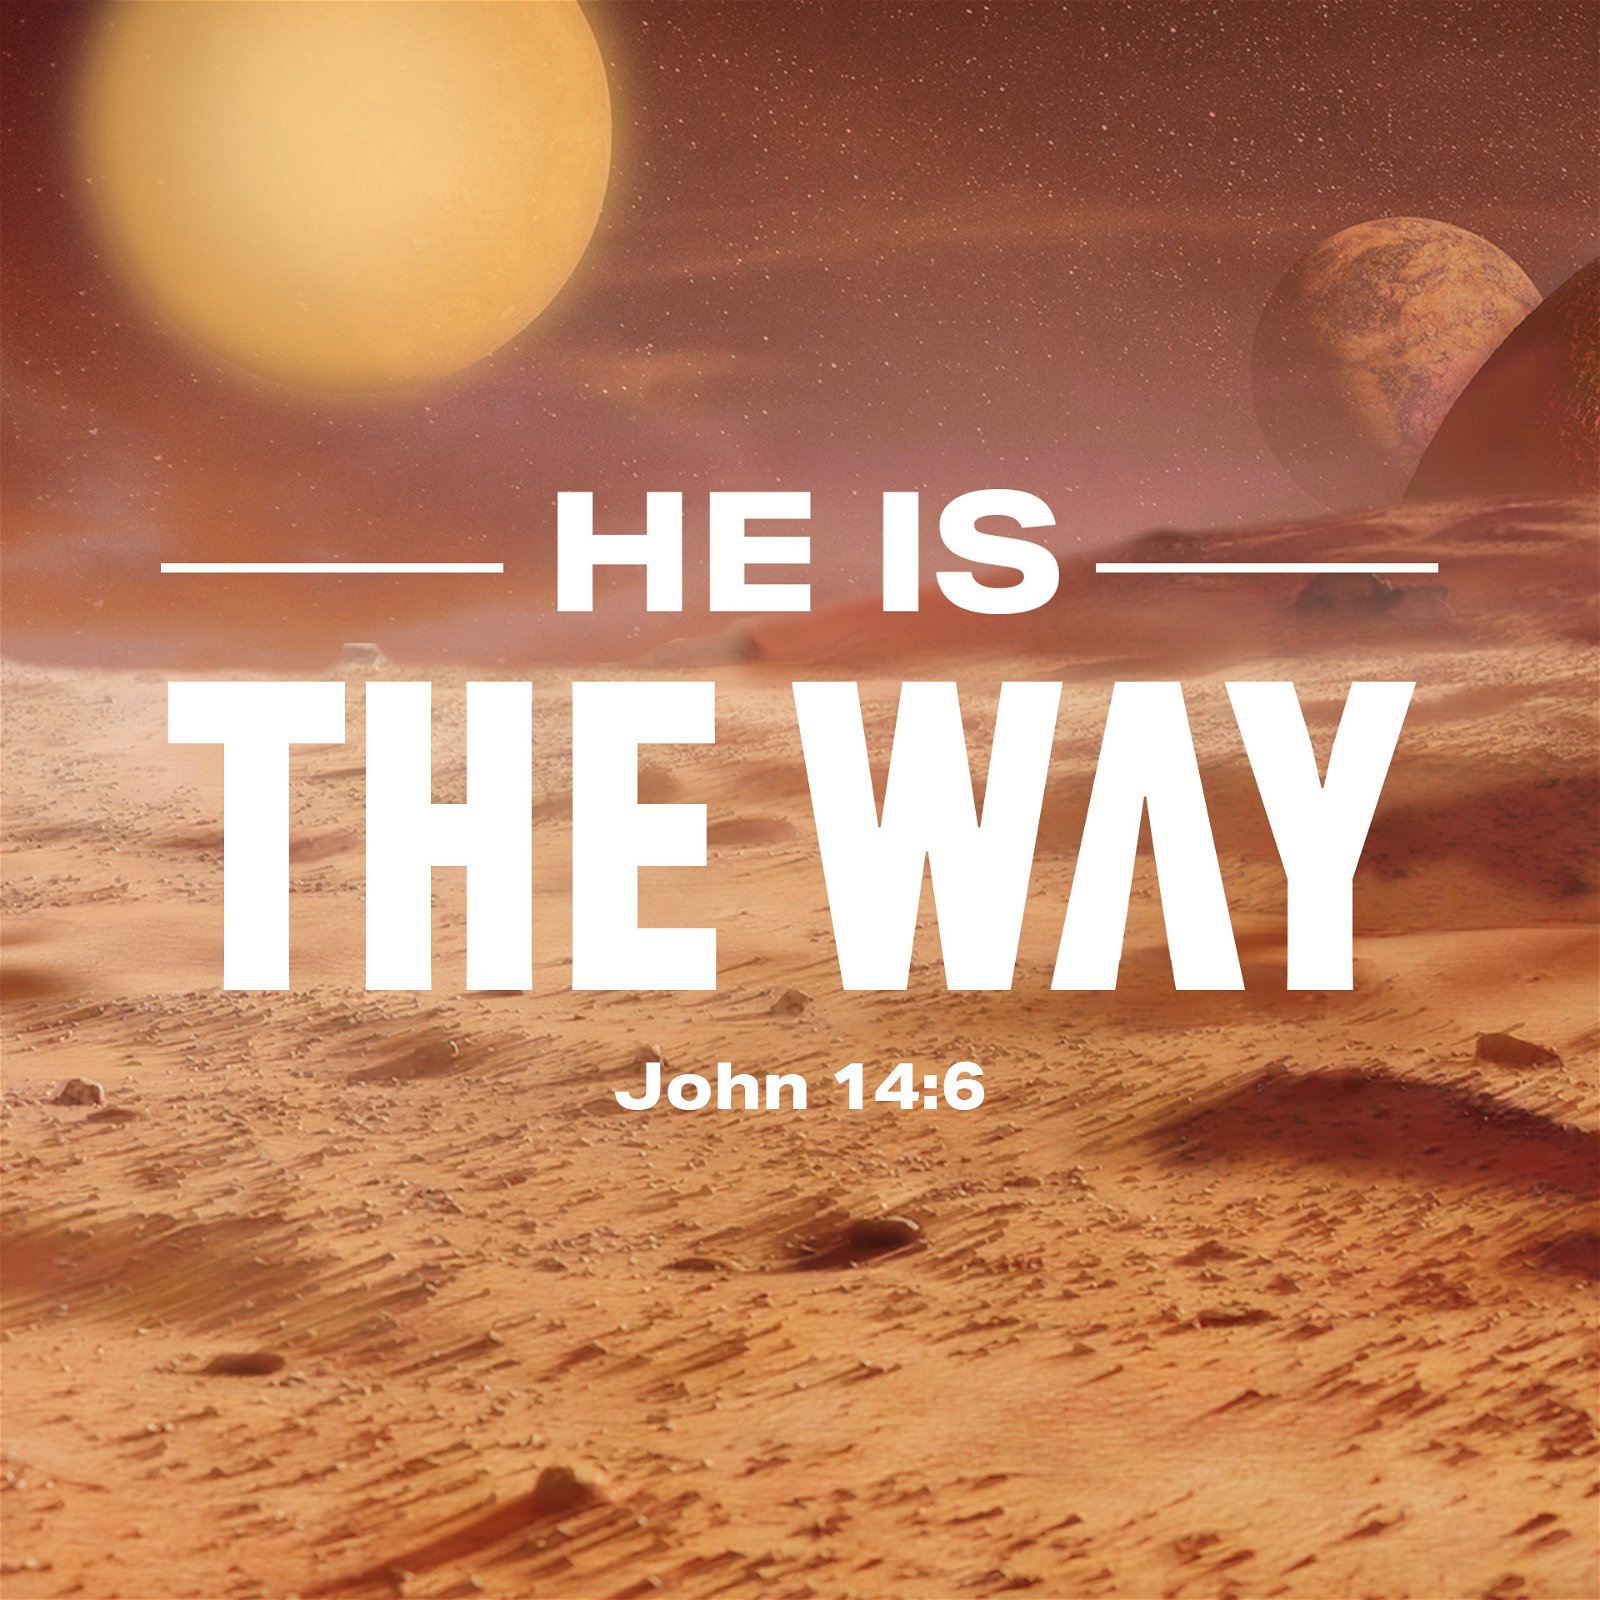 He is the Way